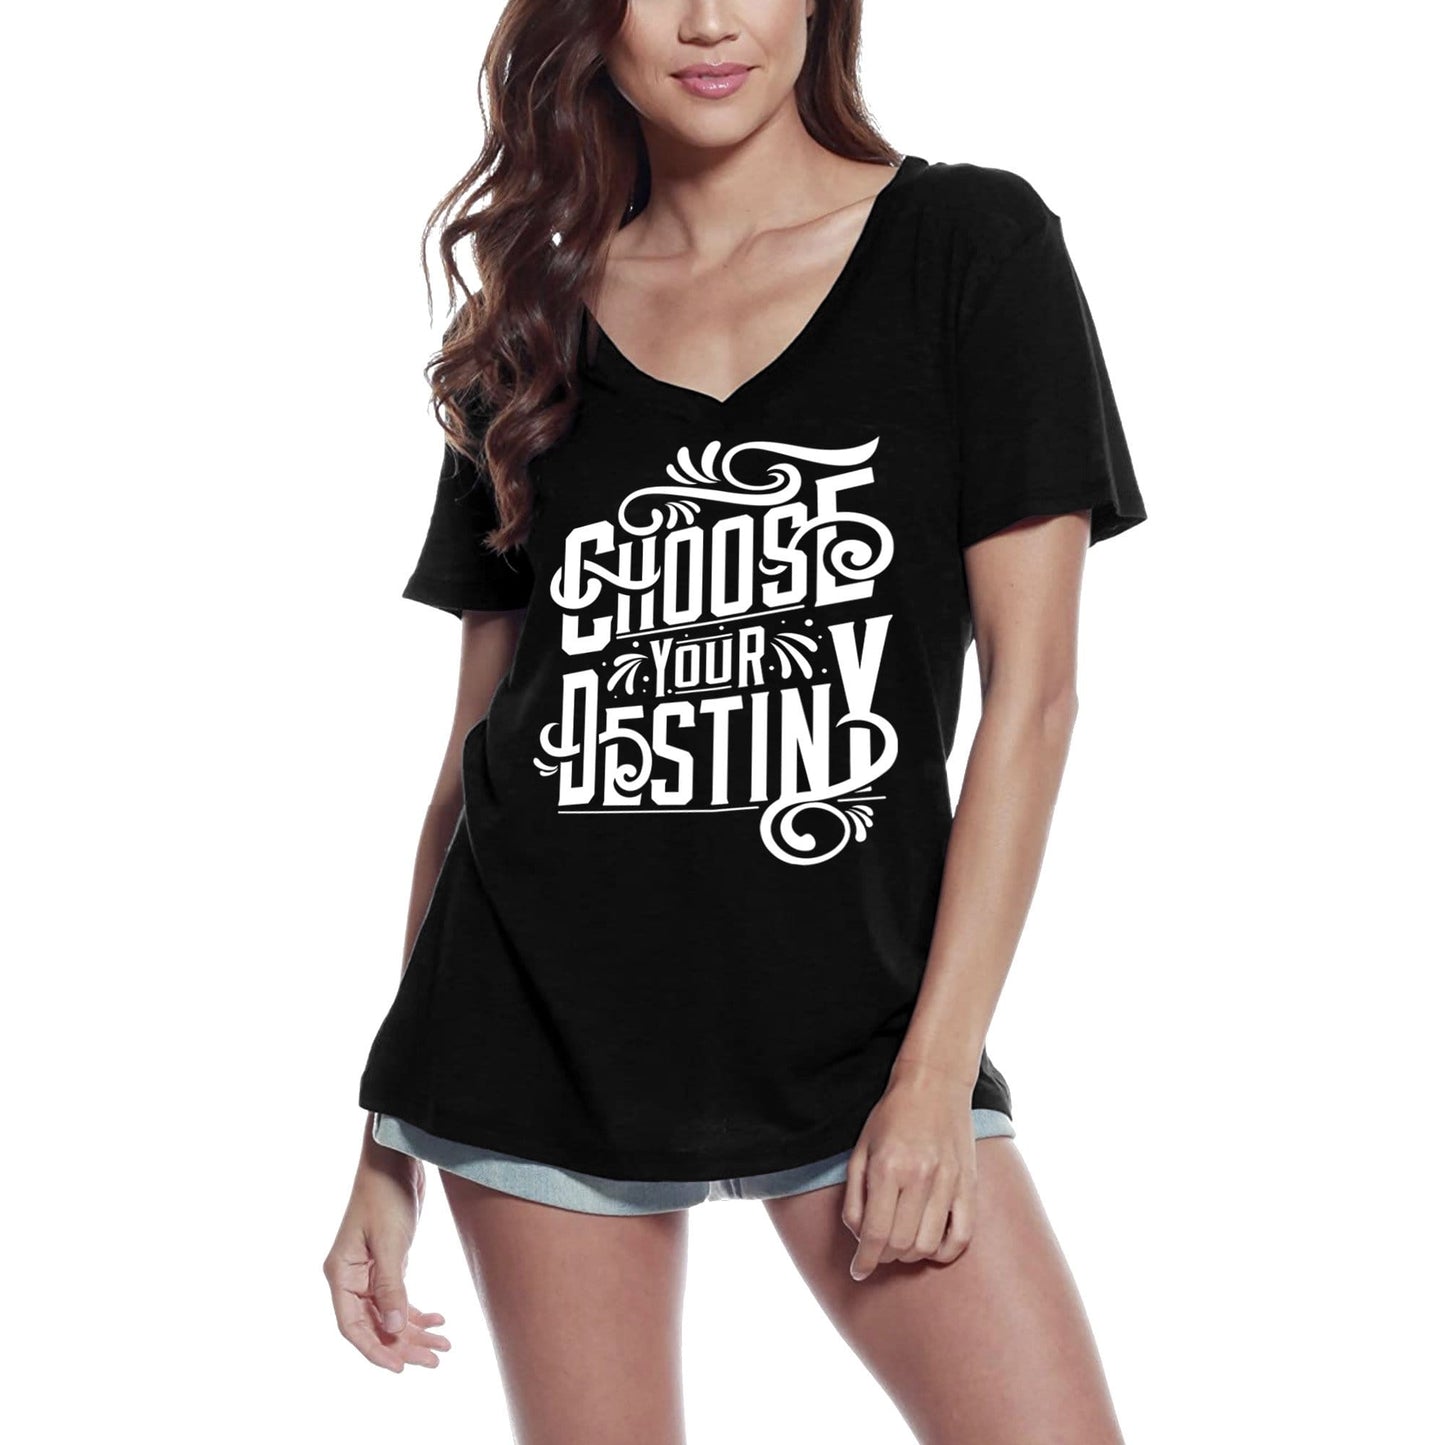 ULTRABASIC Women's T-Shirt Choose Your Destiny - Motivational Slogan Graphic Tee